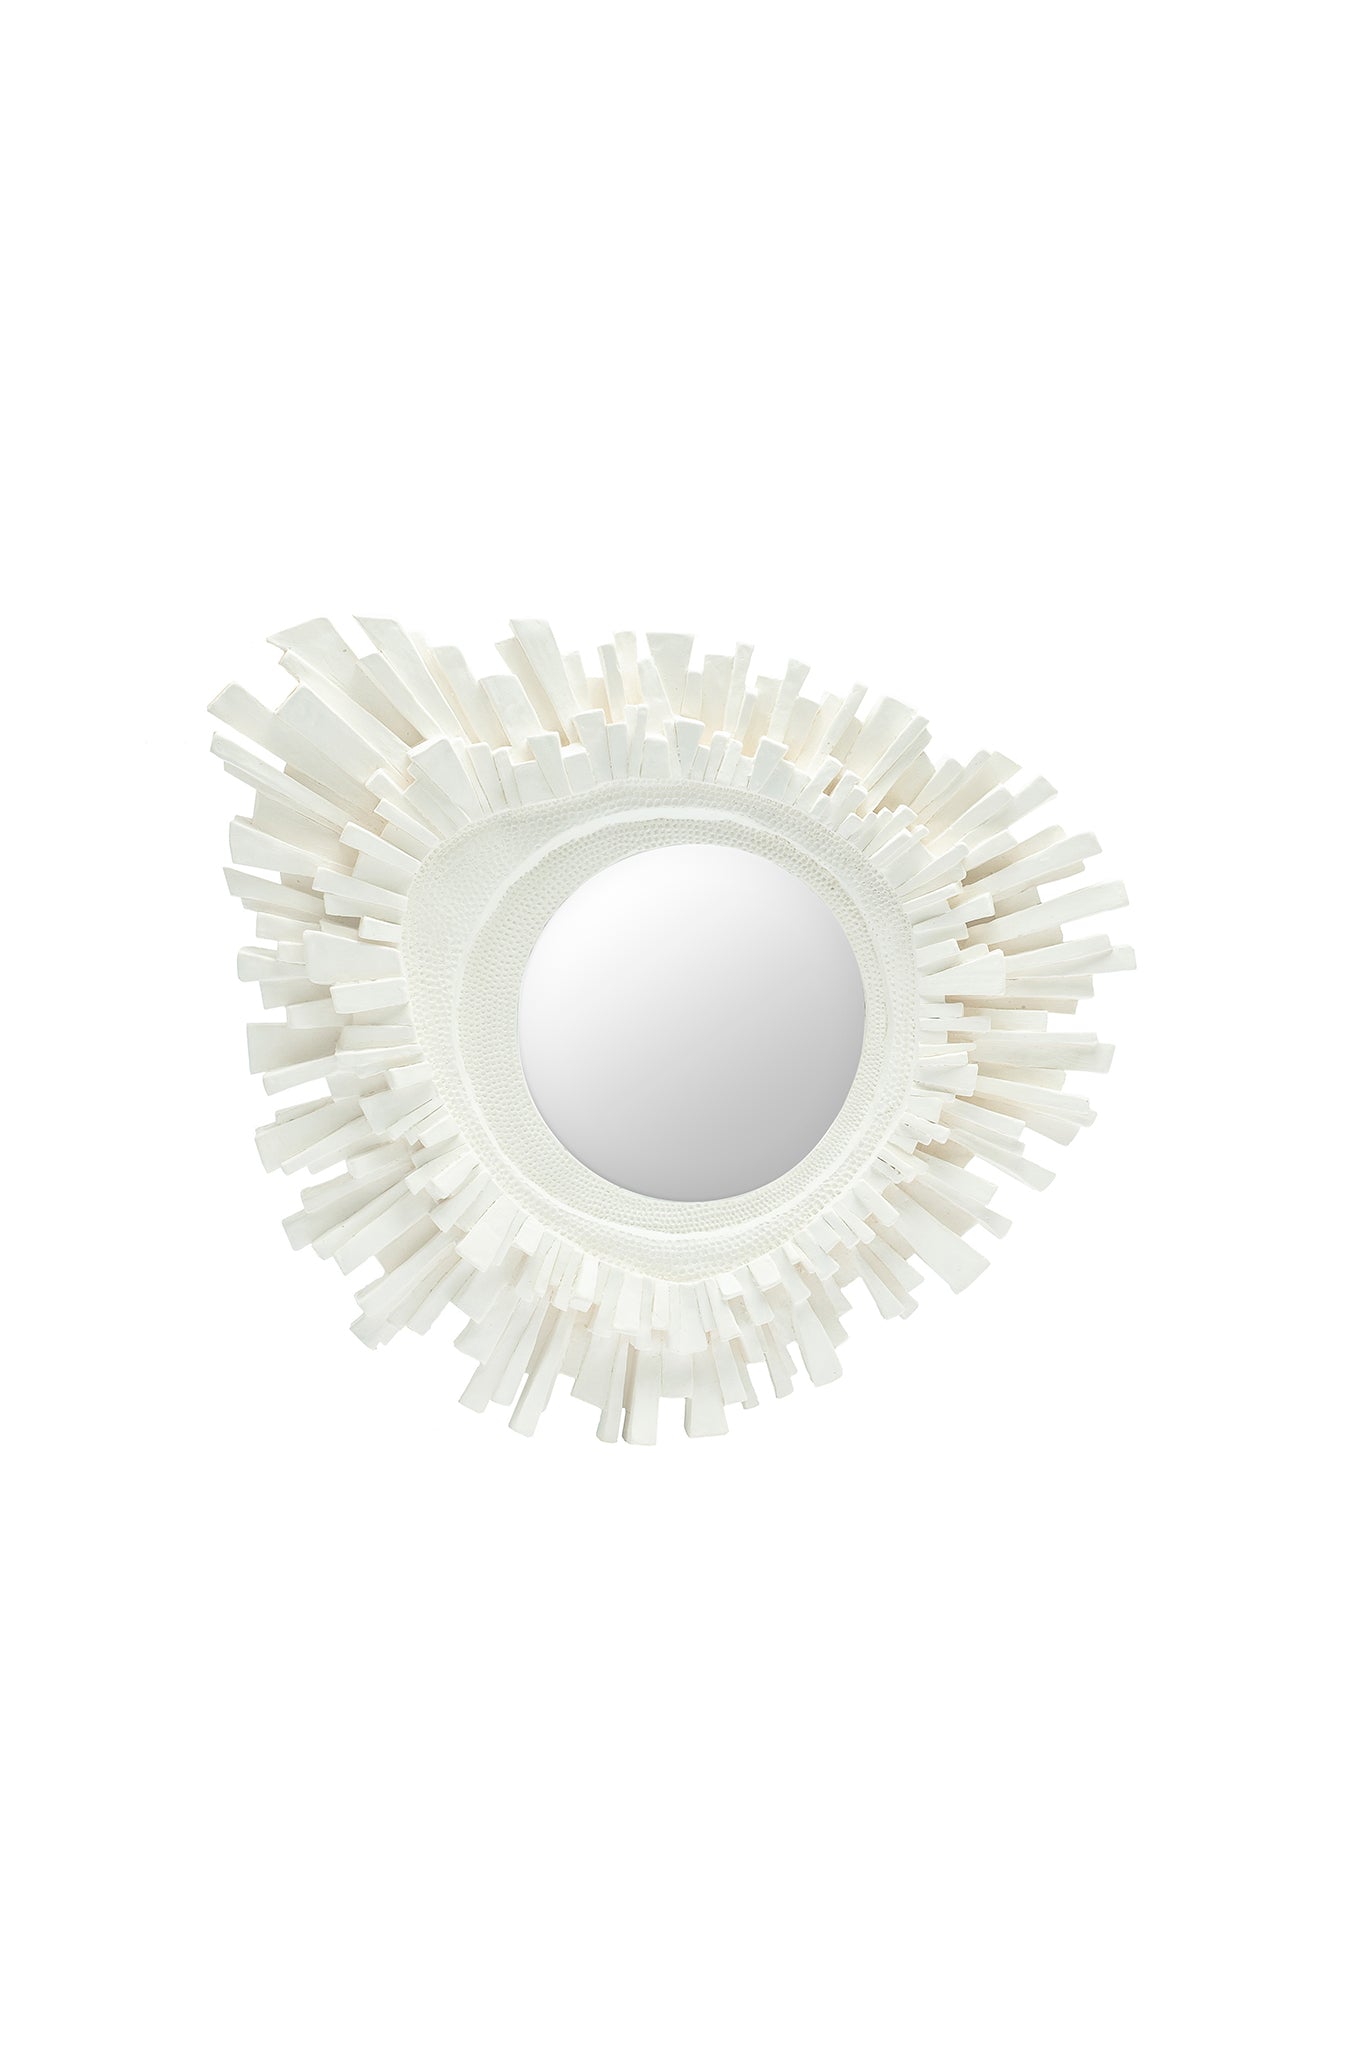 French Plaster Sunburst Mirror, Large #1